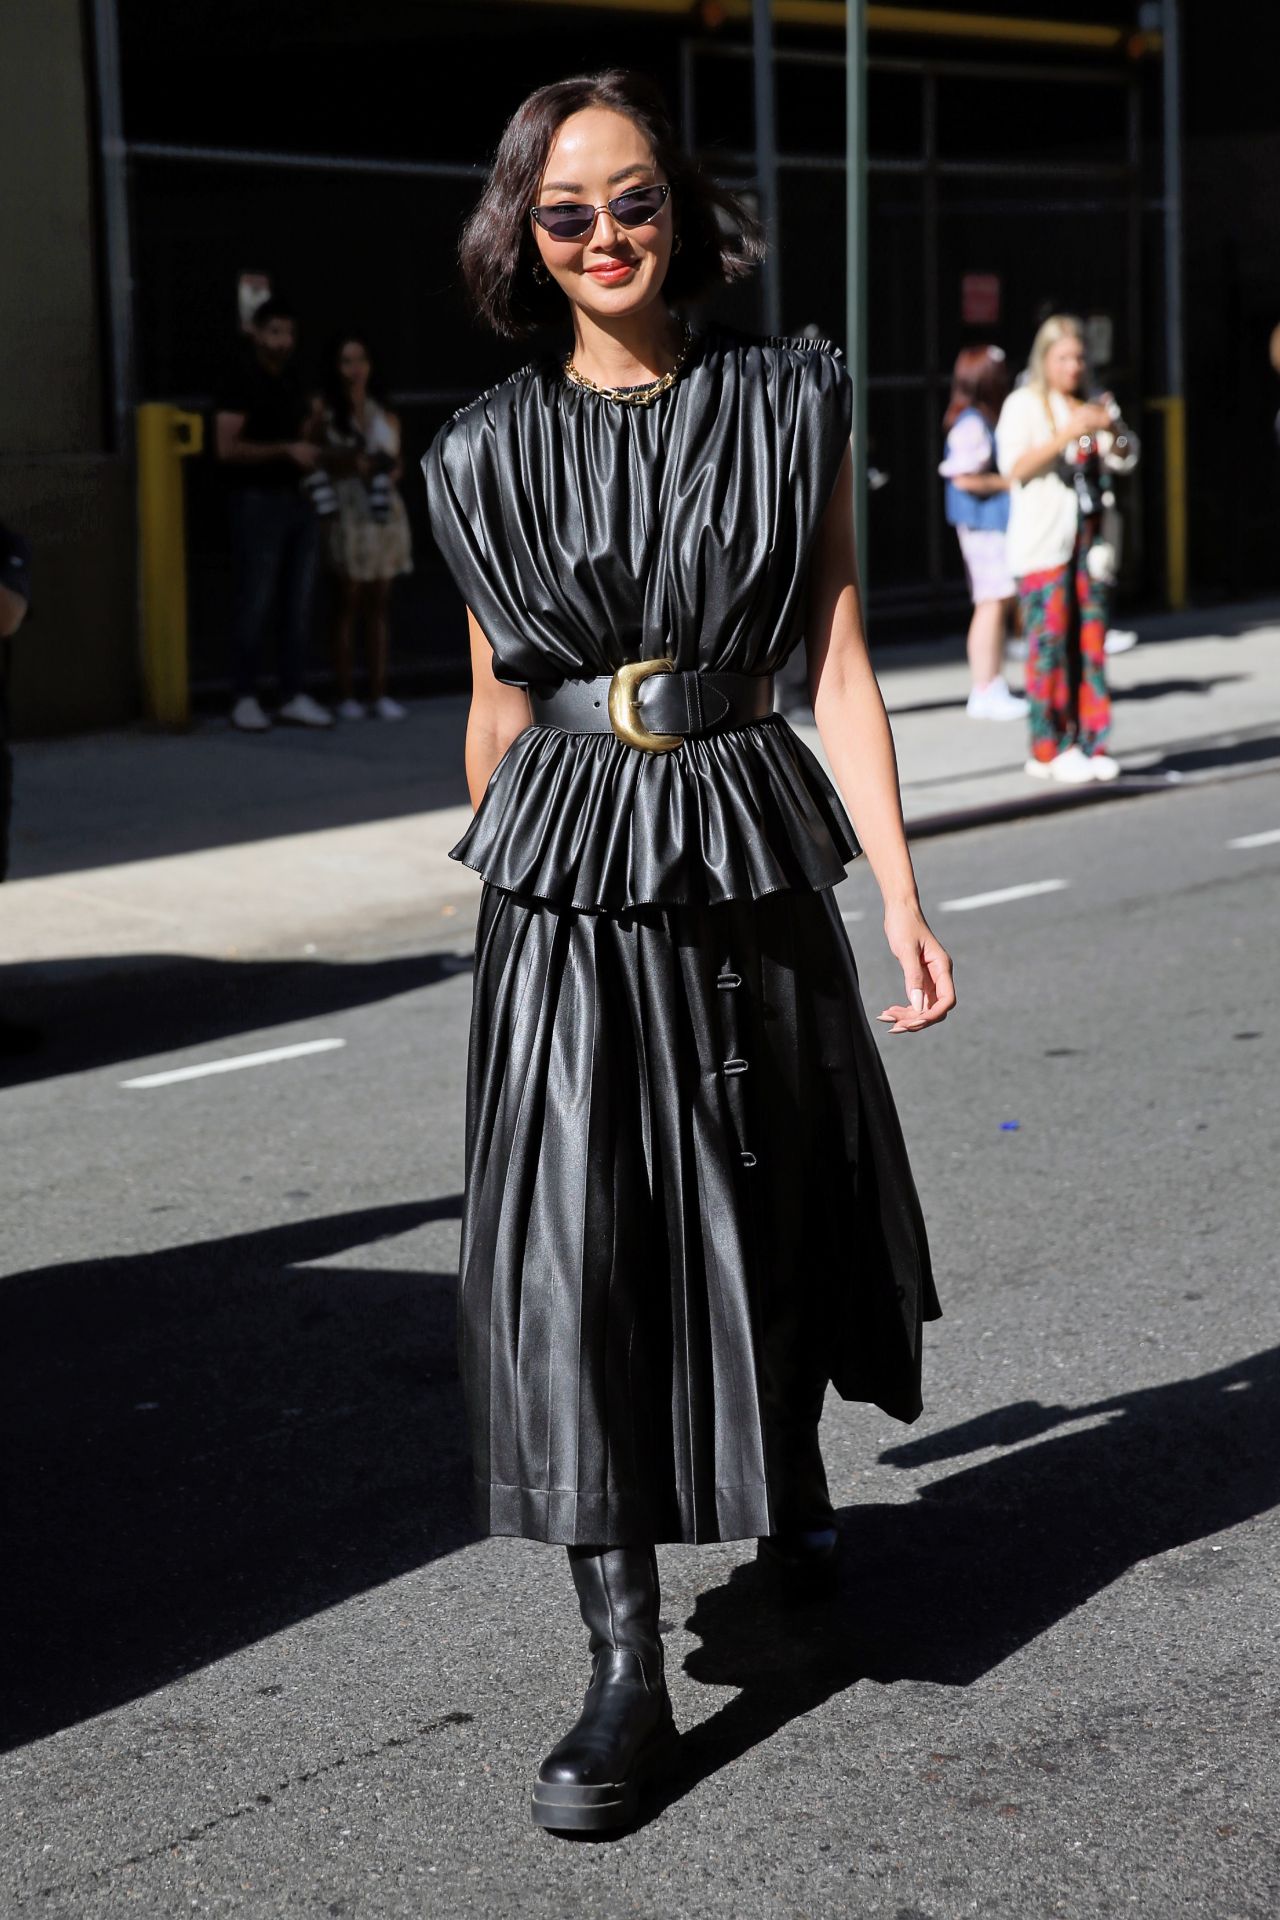 Chriselle Lim Wears a Black Leather Dress - Altuzarra Show at NYFW 09 ...